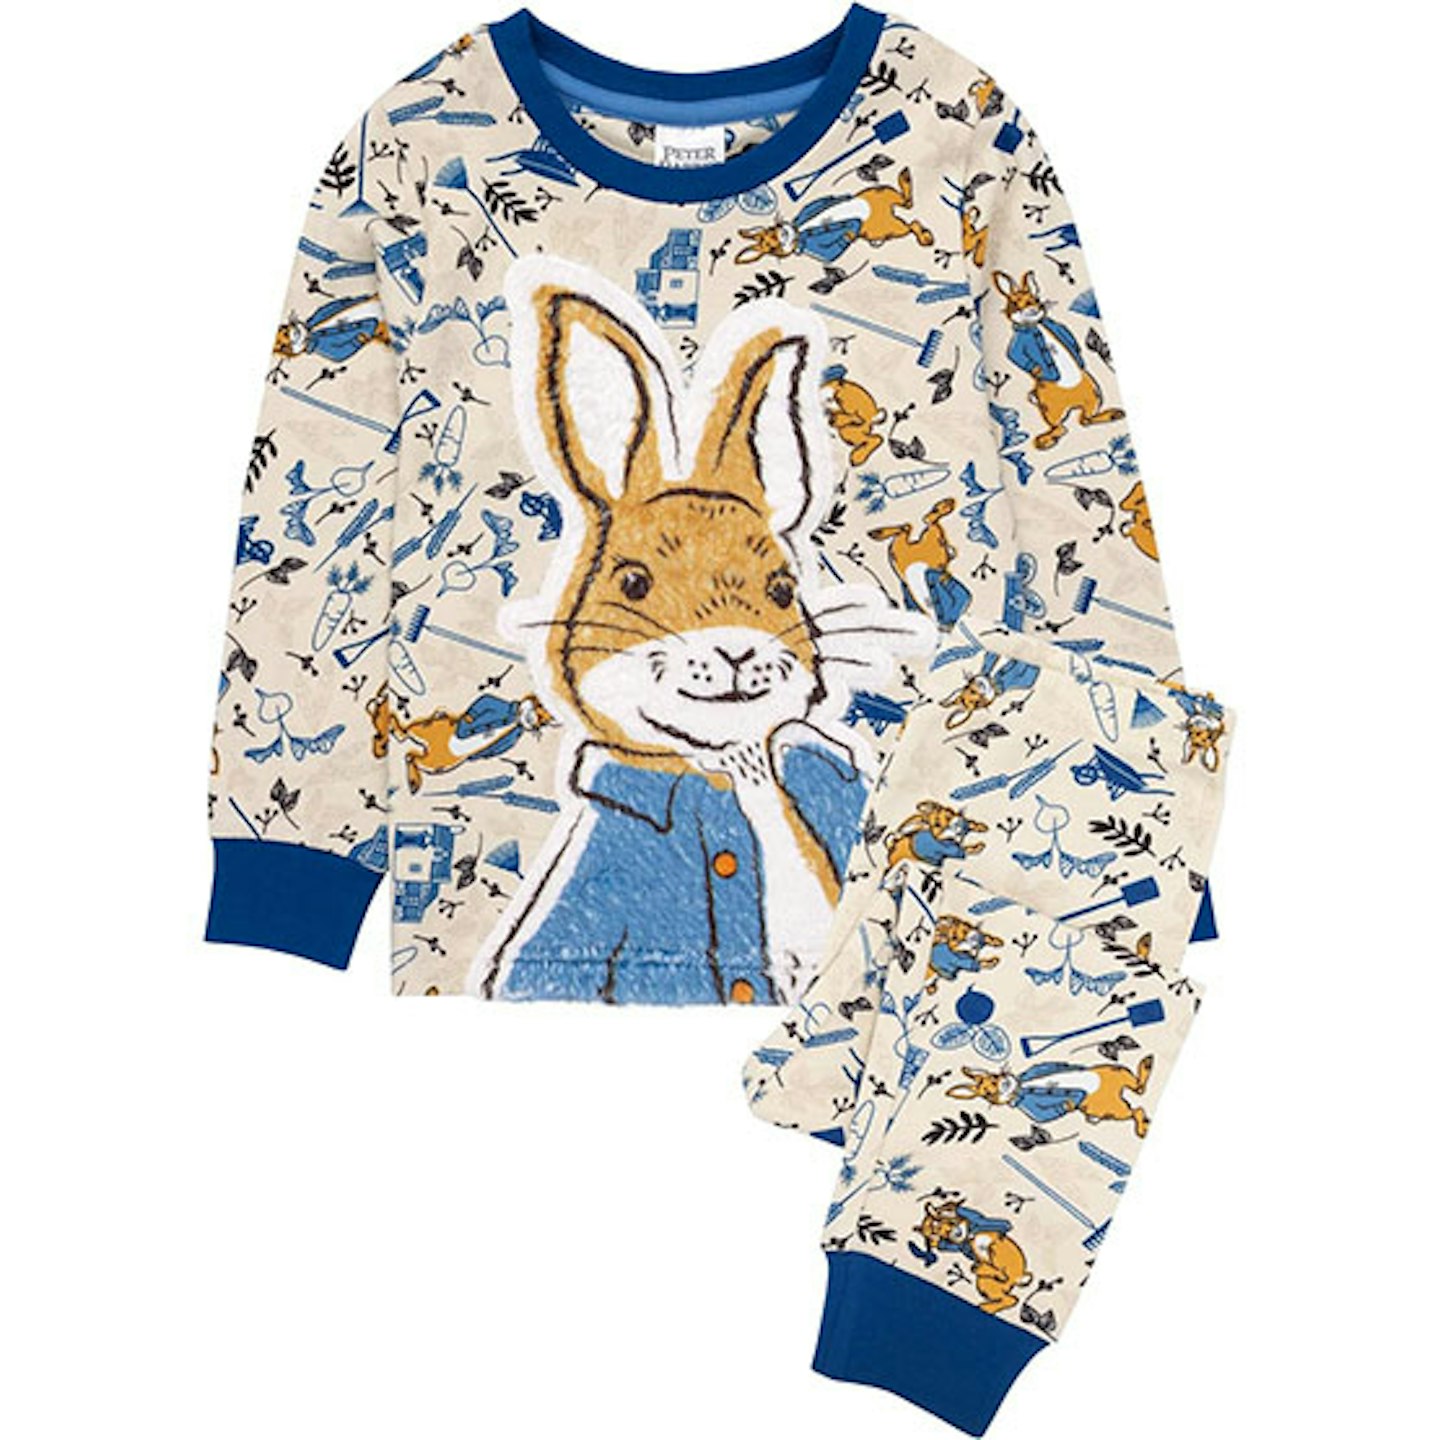 Peter Rabbit pyjamas